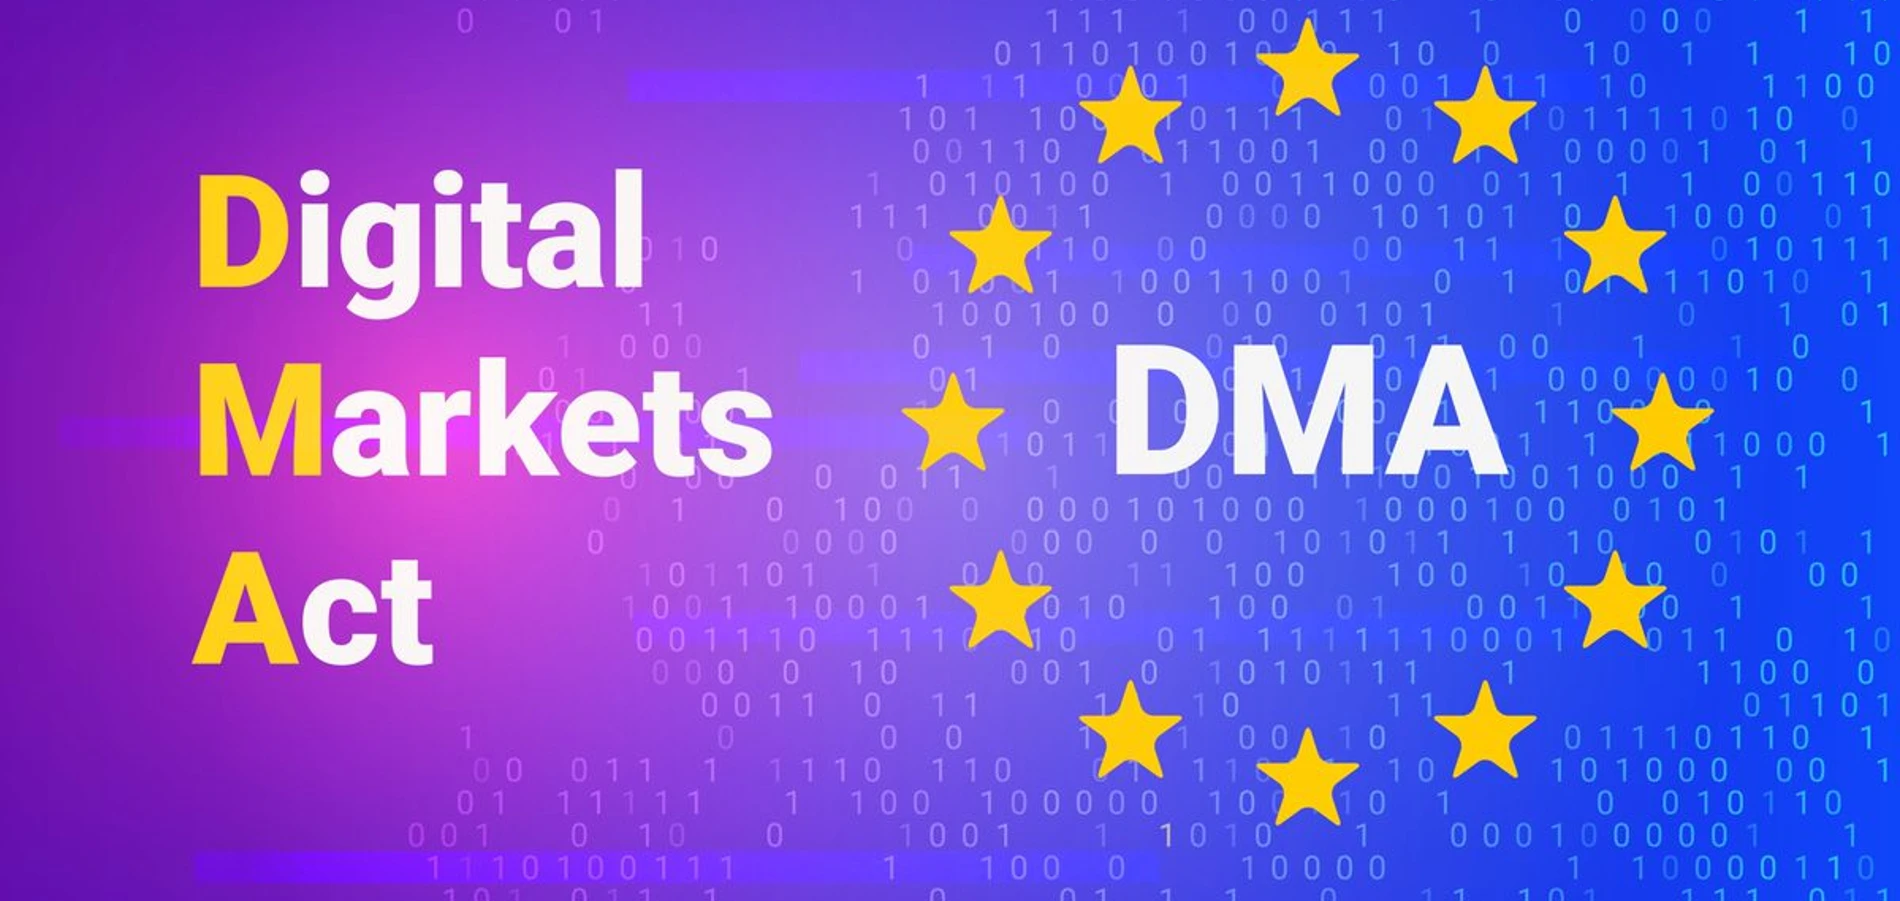 Digital Markets Act (DMA)